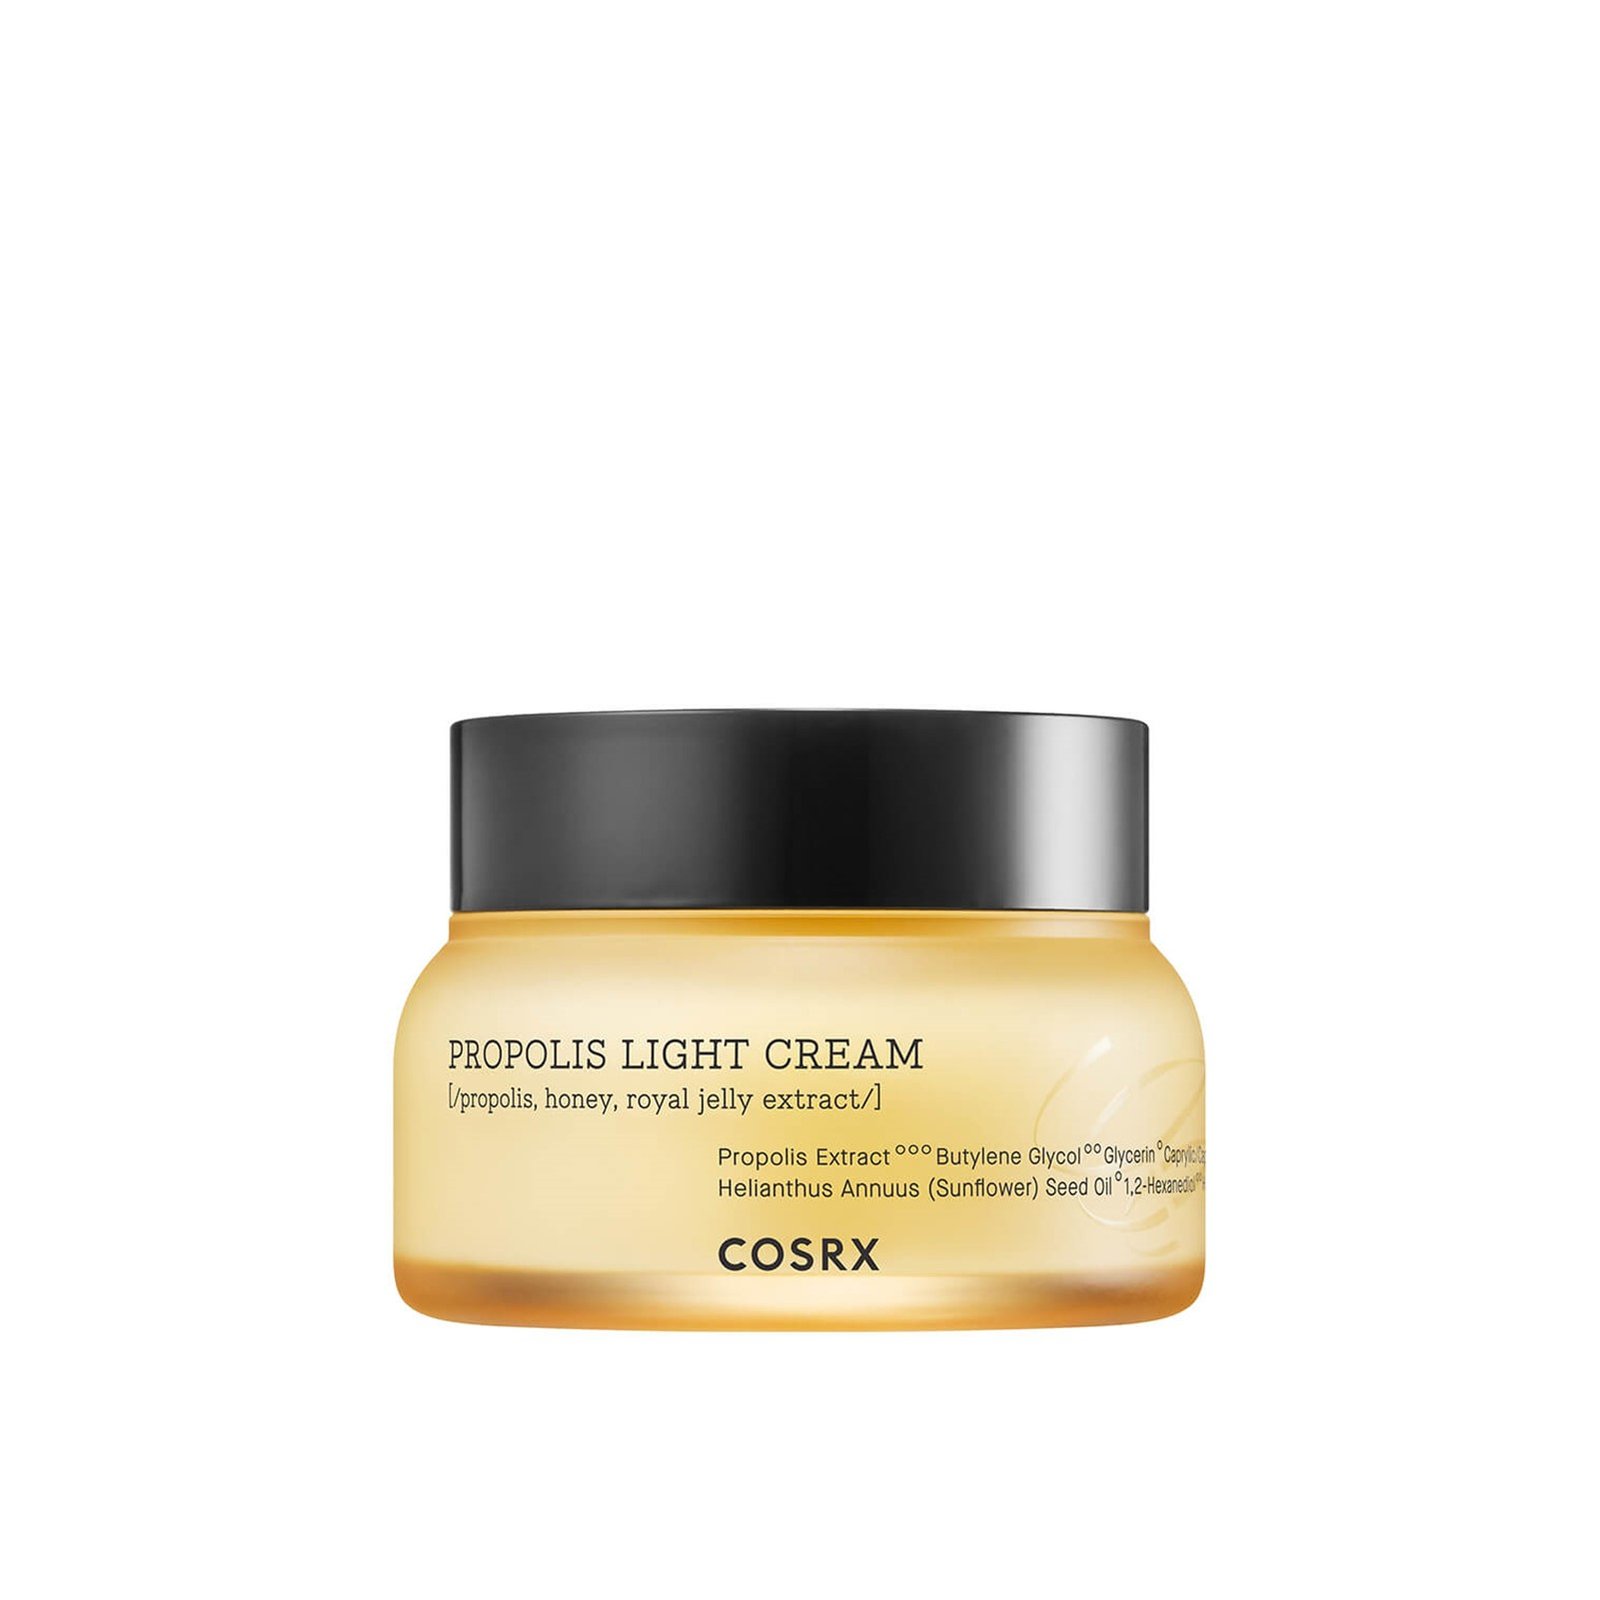 COSRX Full Fit Propolis Light Cream 65ml (2.19 fl oz)